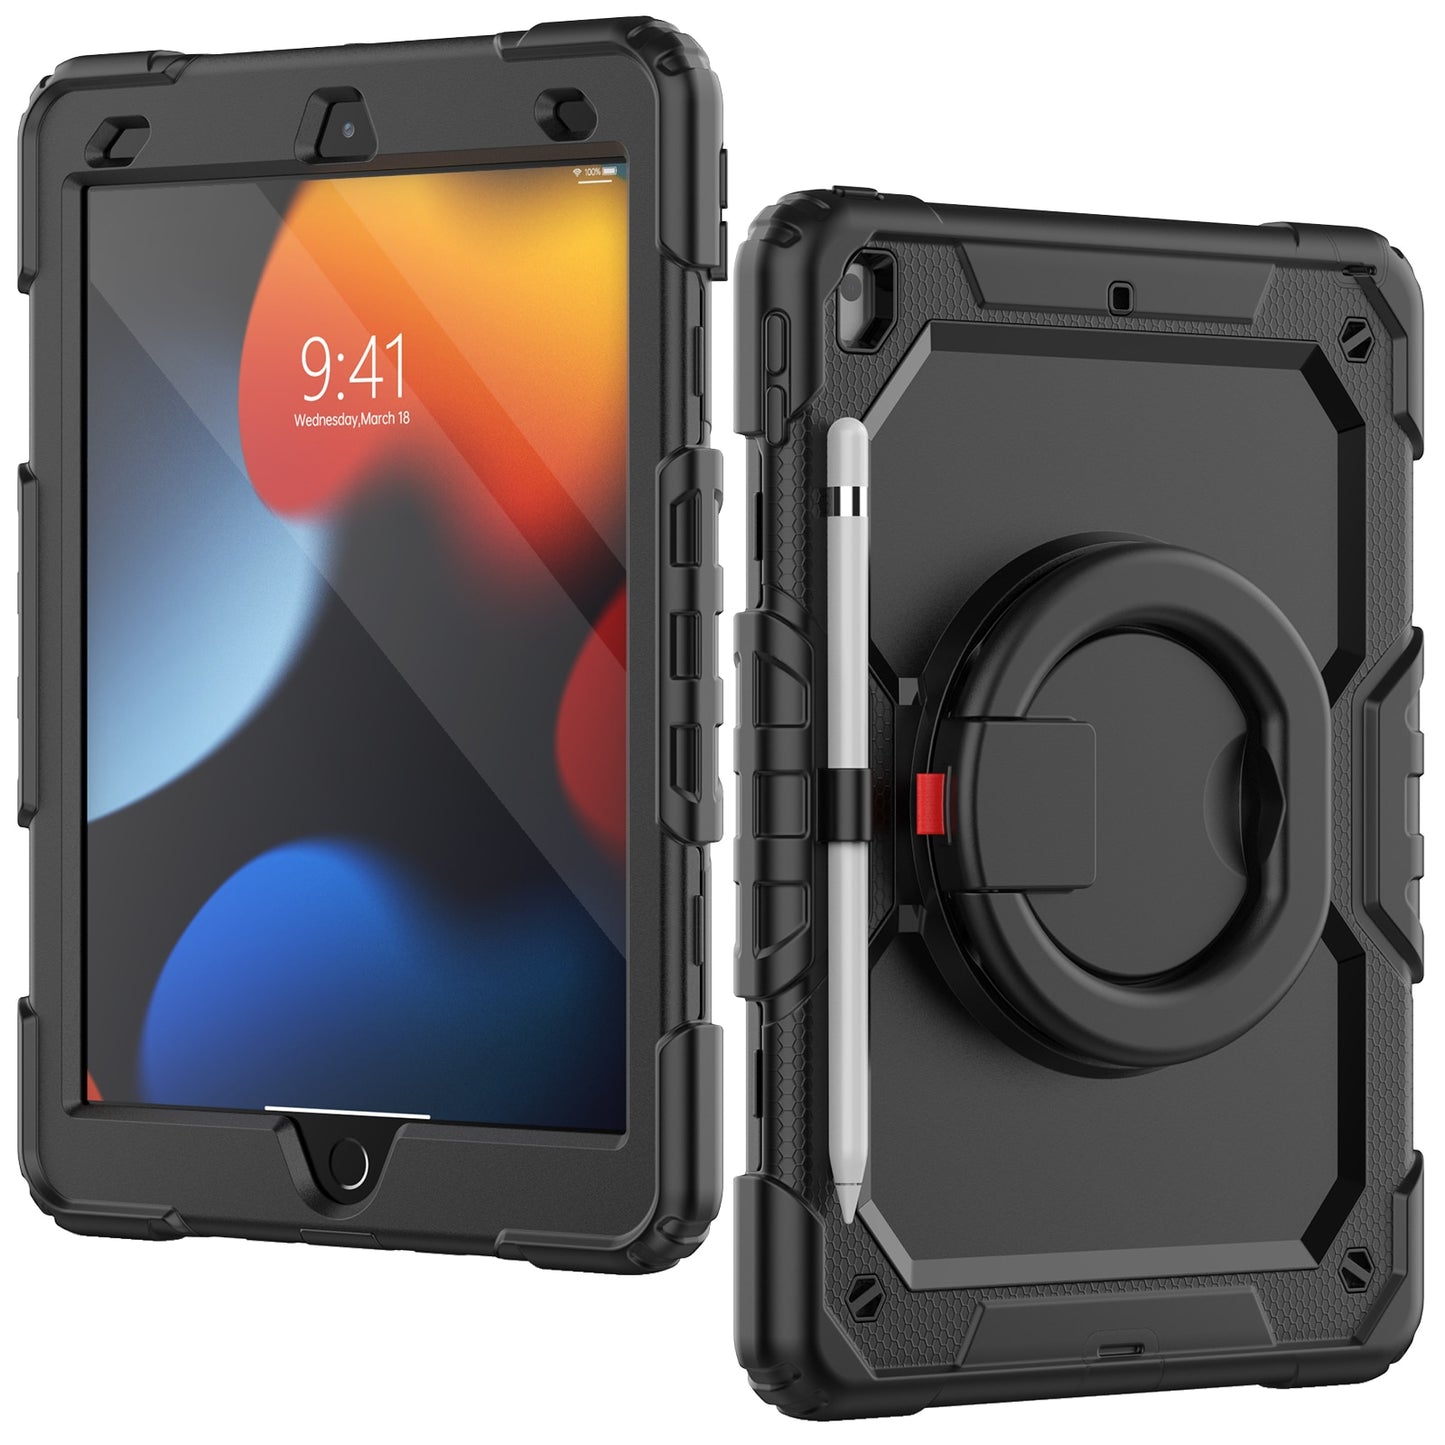 Smart Cover iPad Case Shockproof Design